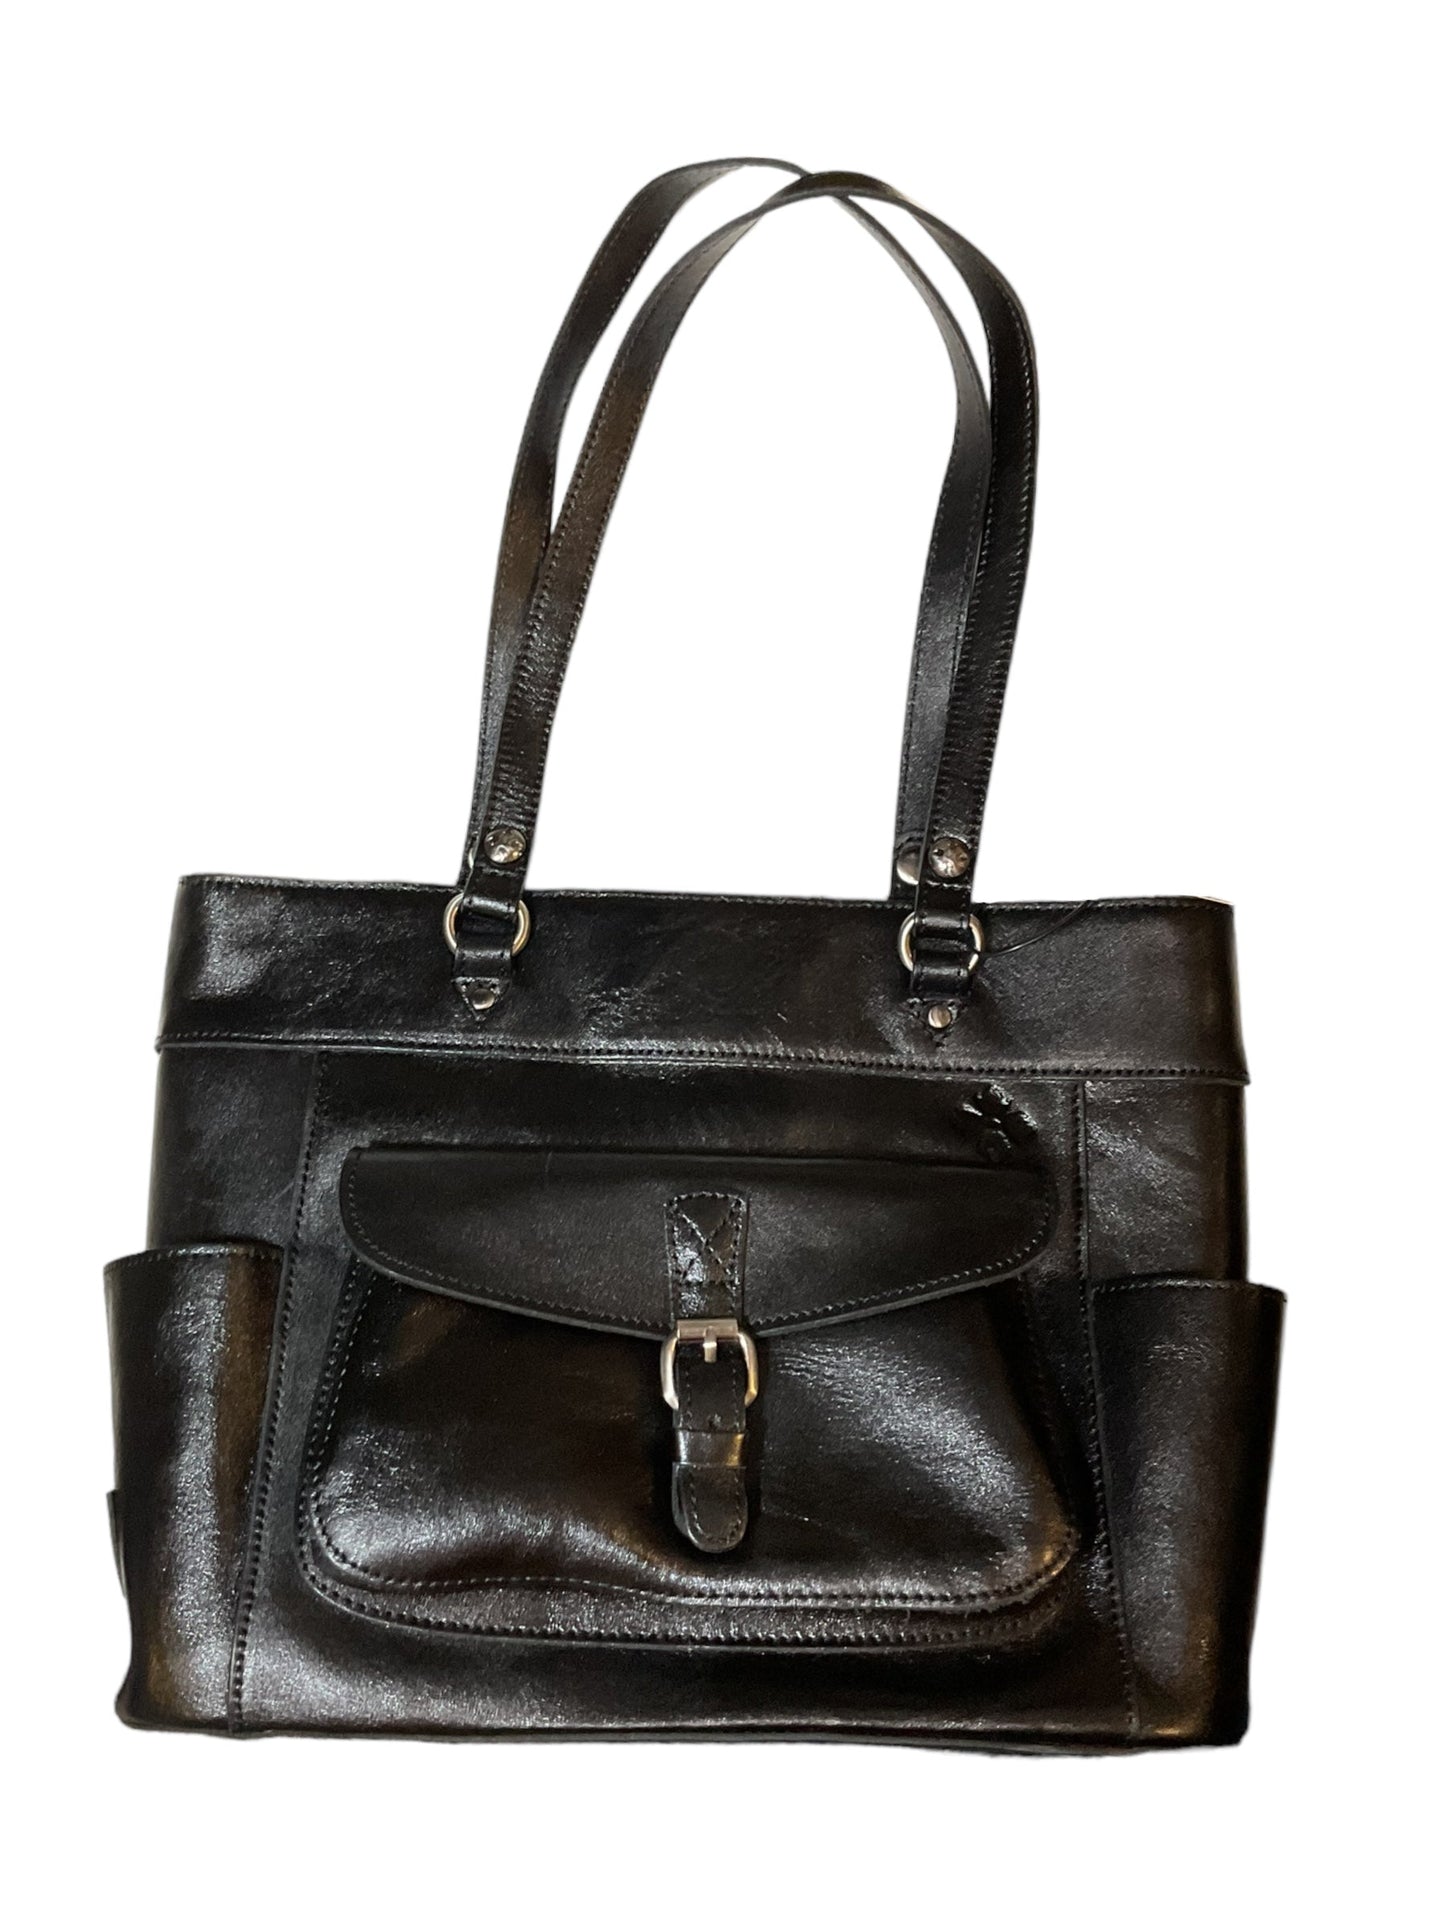 Handbag Designer Patricia Nash, Size Large